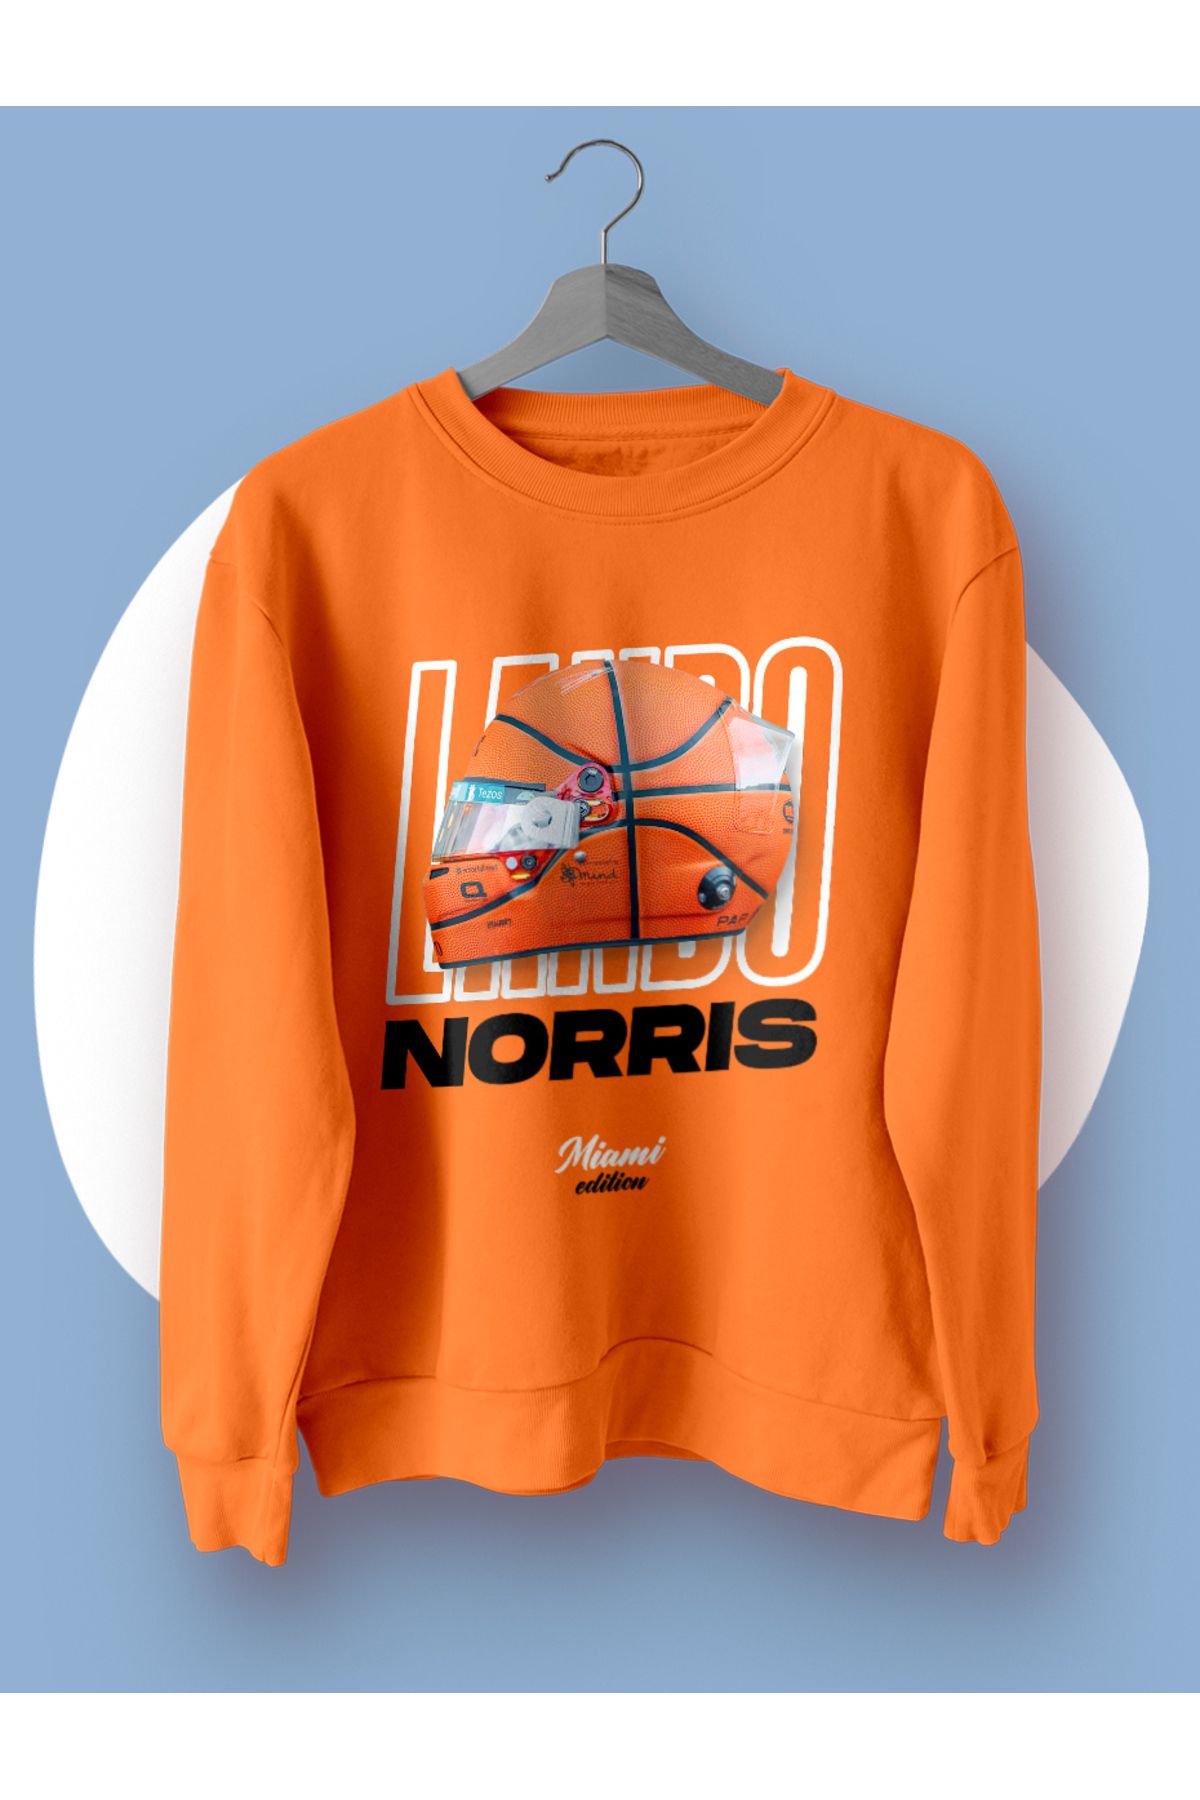 FANBOX SHOP Lando Norris Miami Edition Turuncu Renk Sweatshirt Kazak